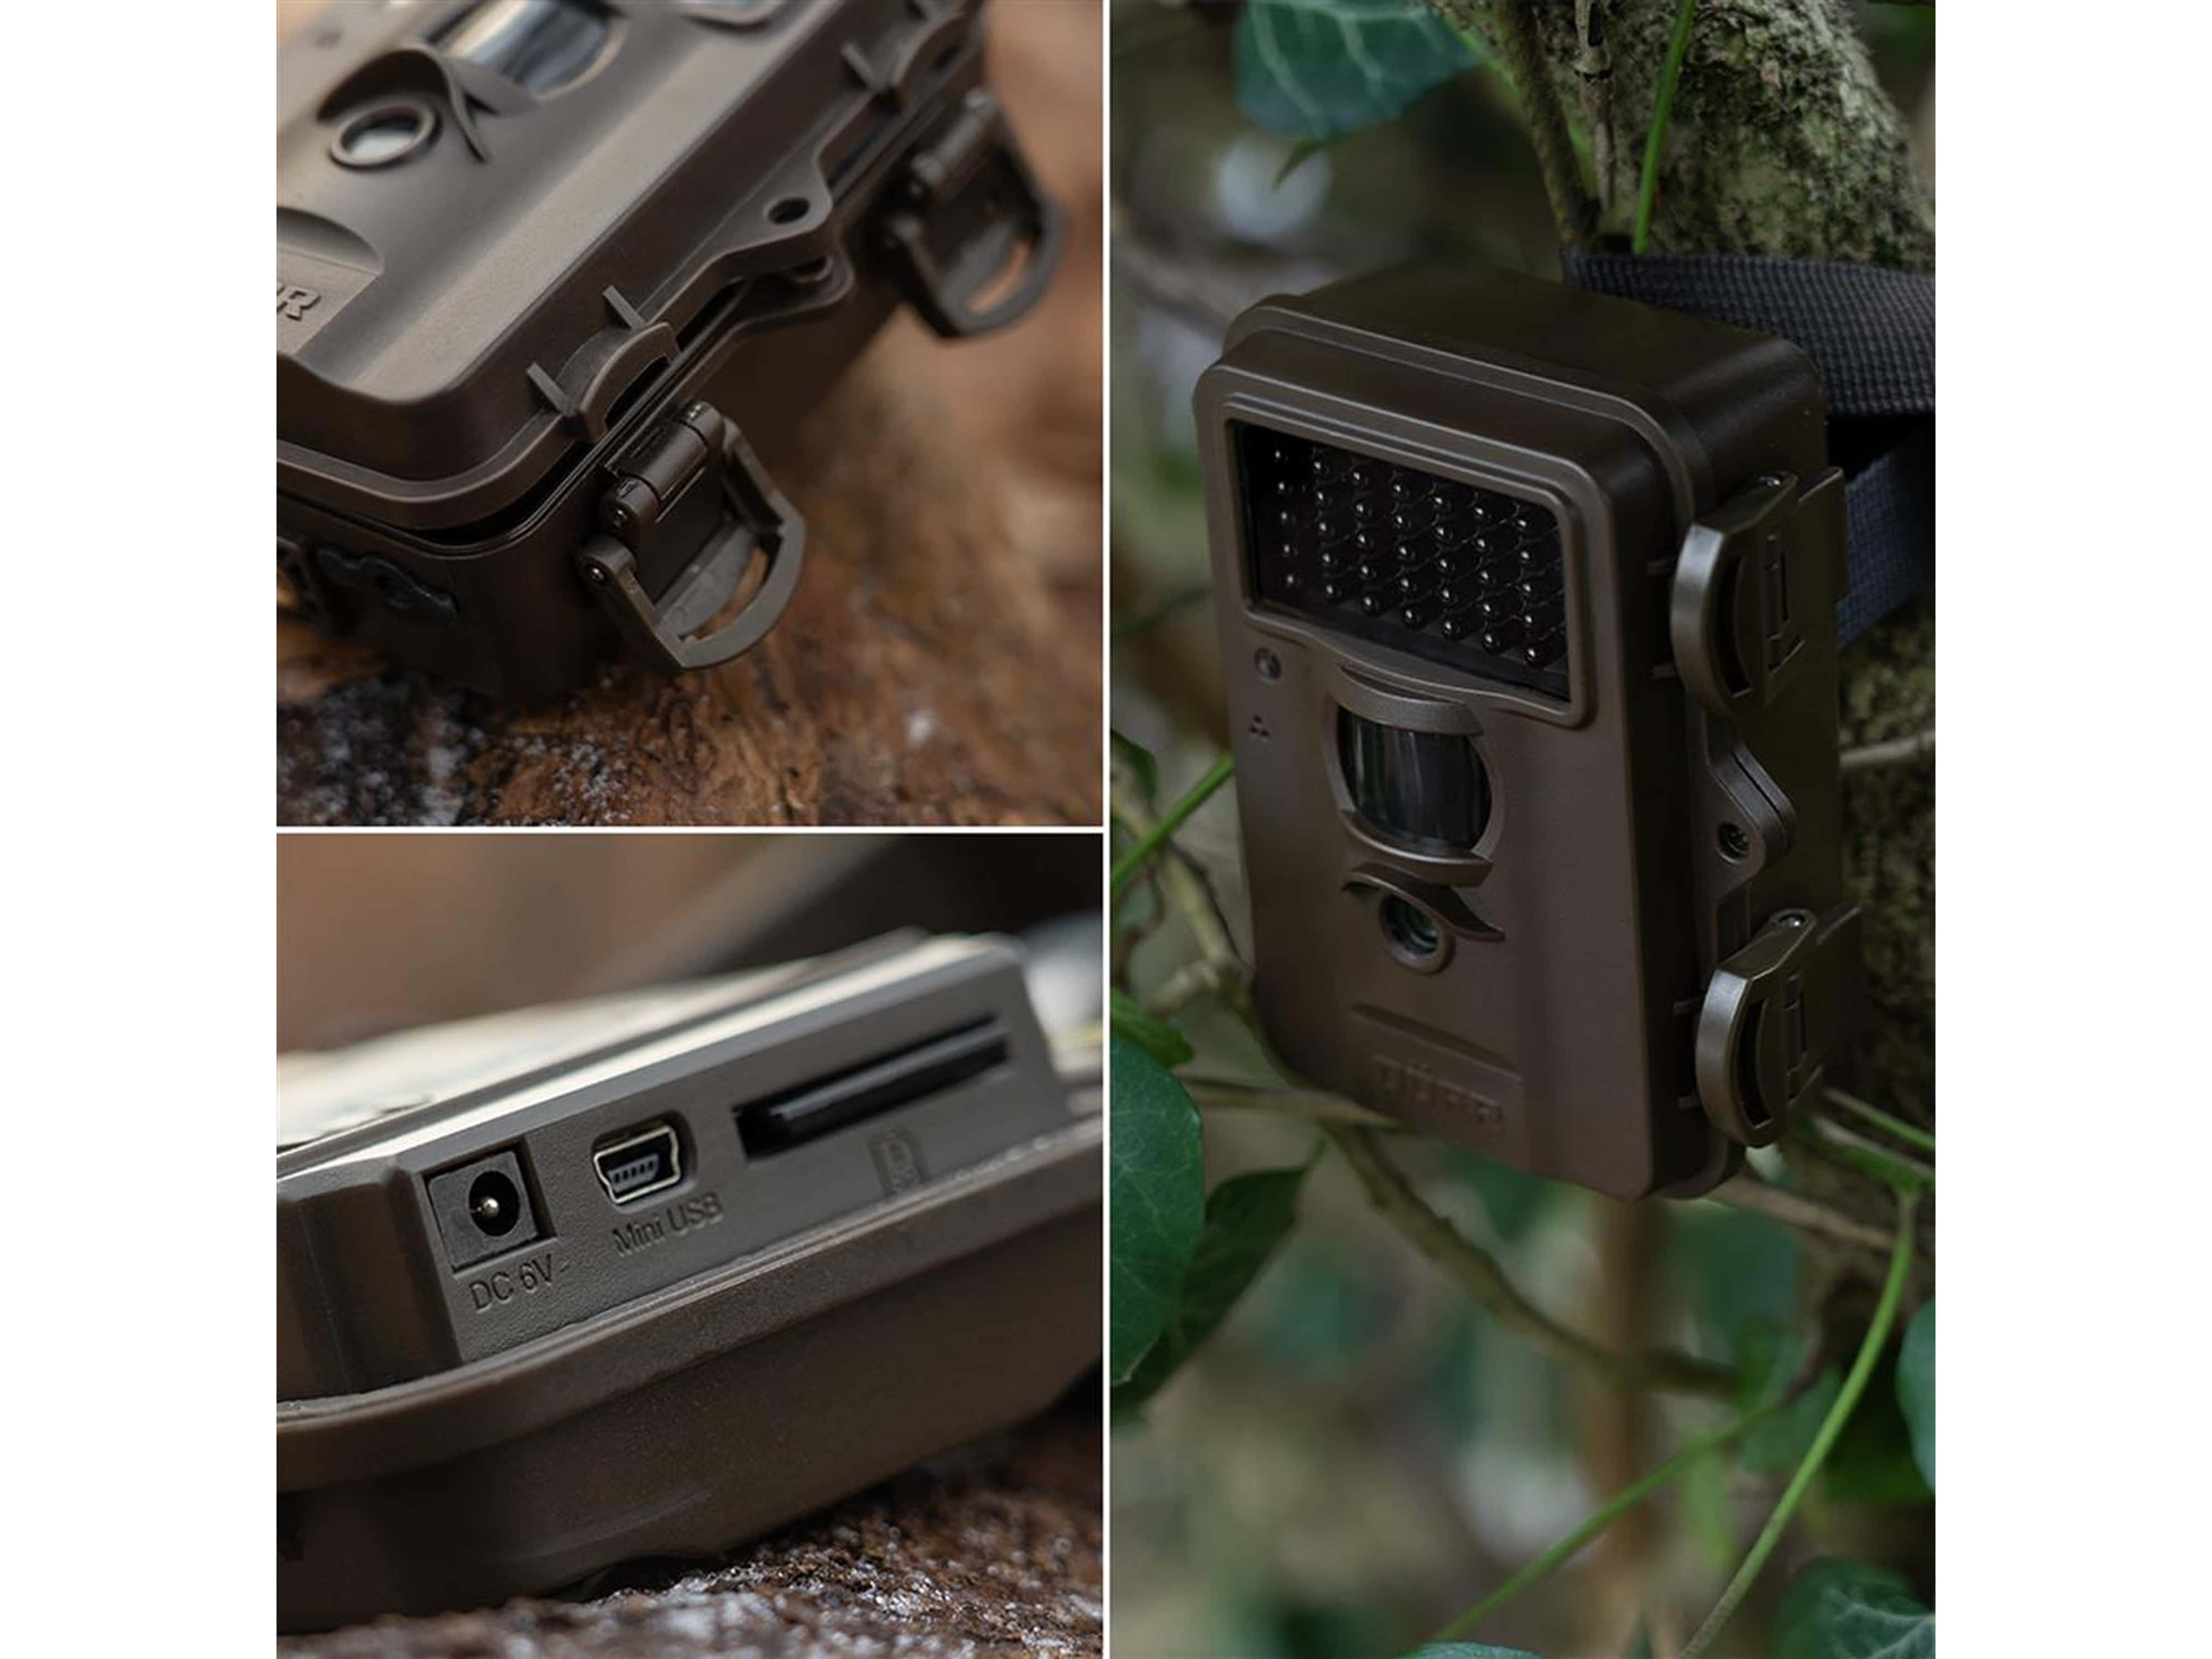 DÖRR Überwachungskamera SnapShot Mini Black, 30MP, 4K